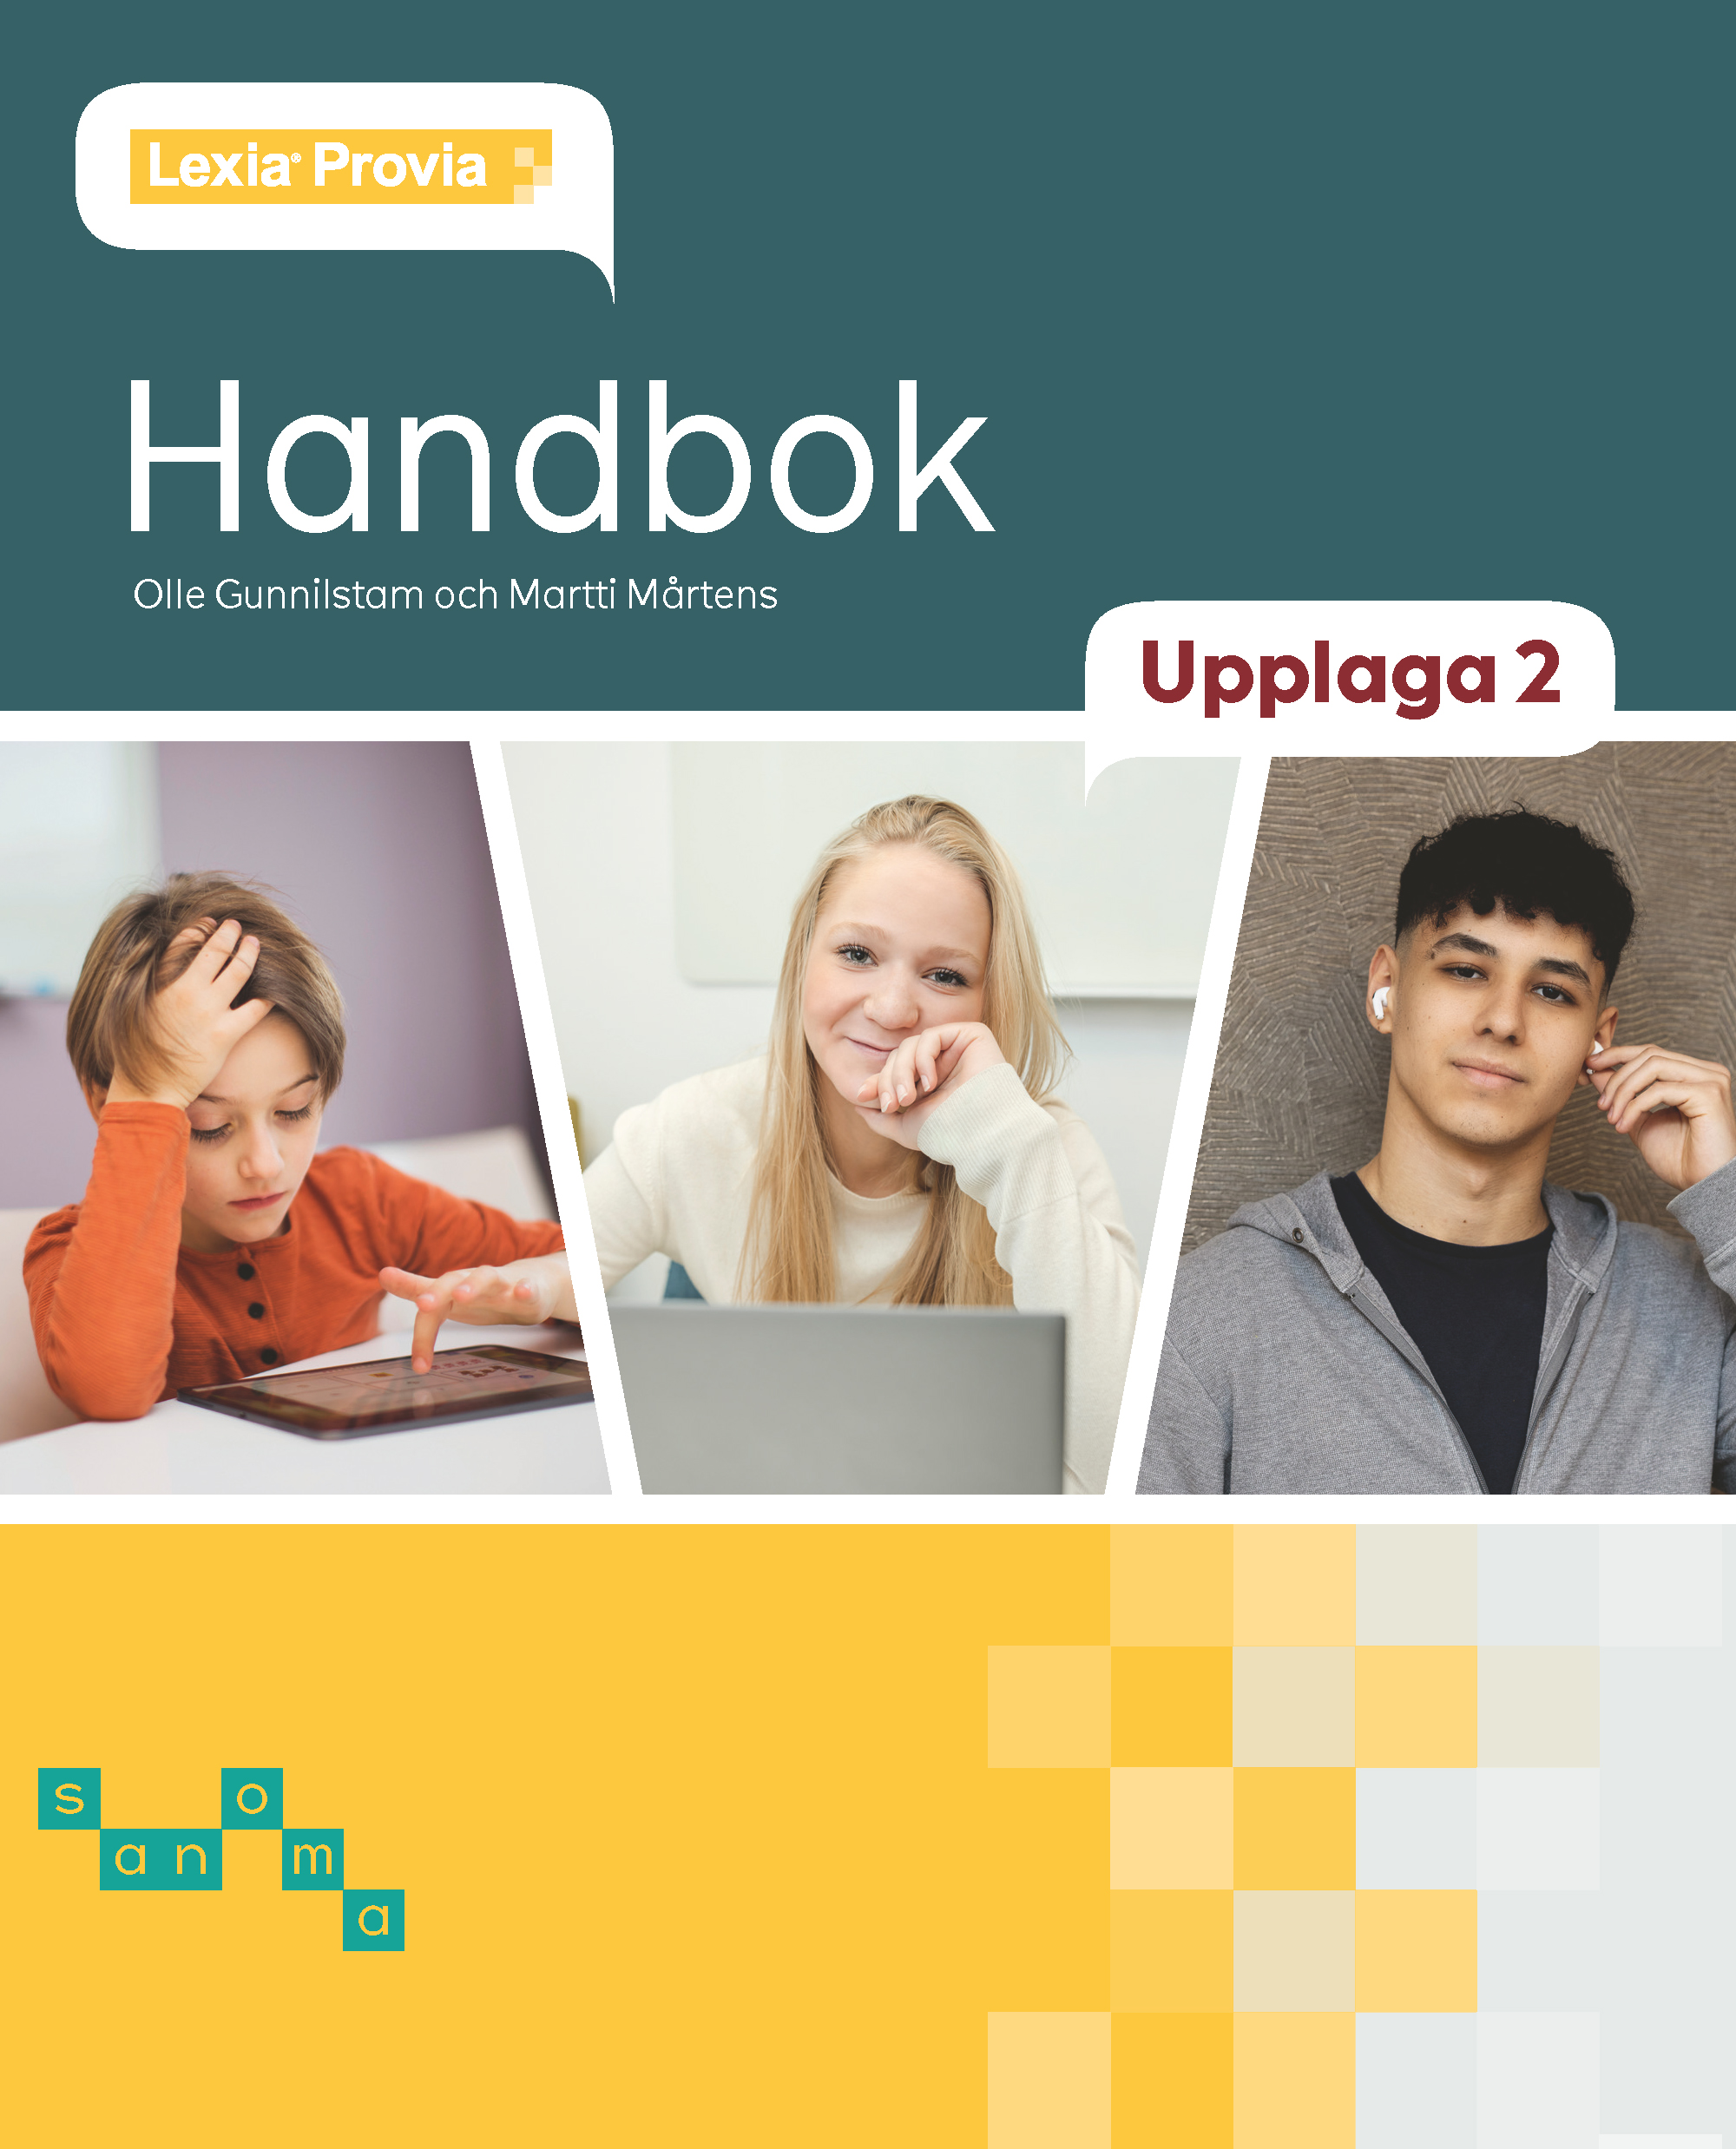 handbok-lexiaproviav2.jpg